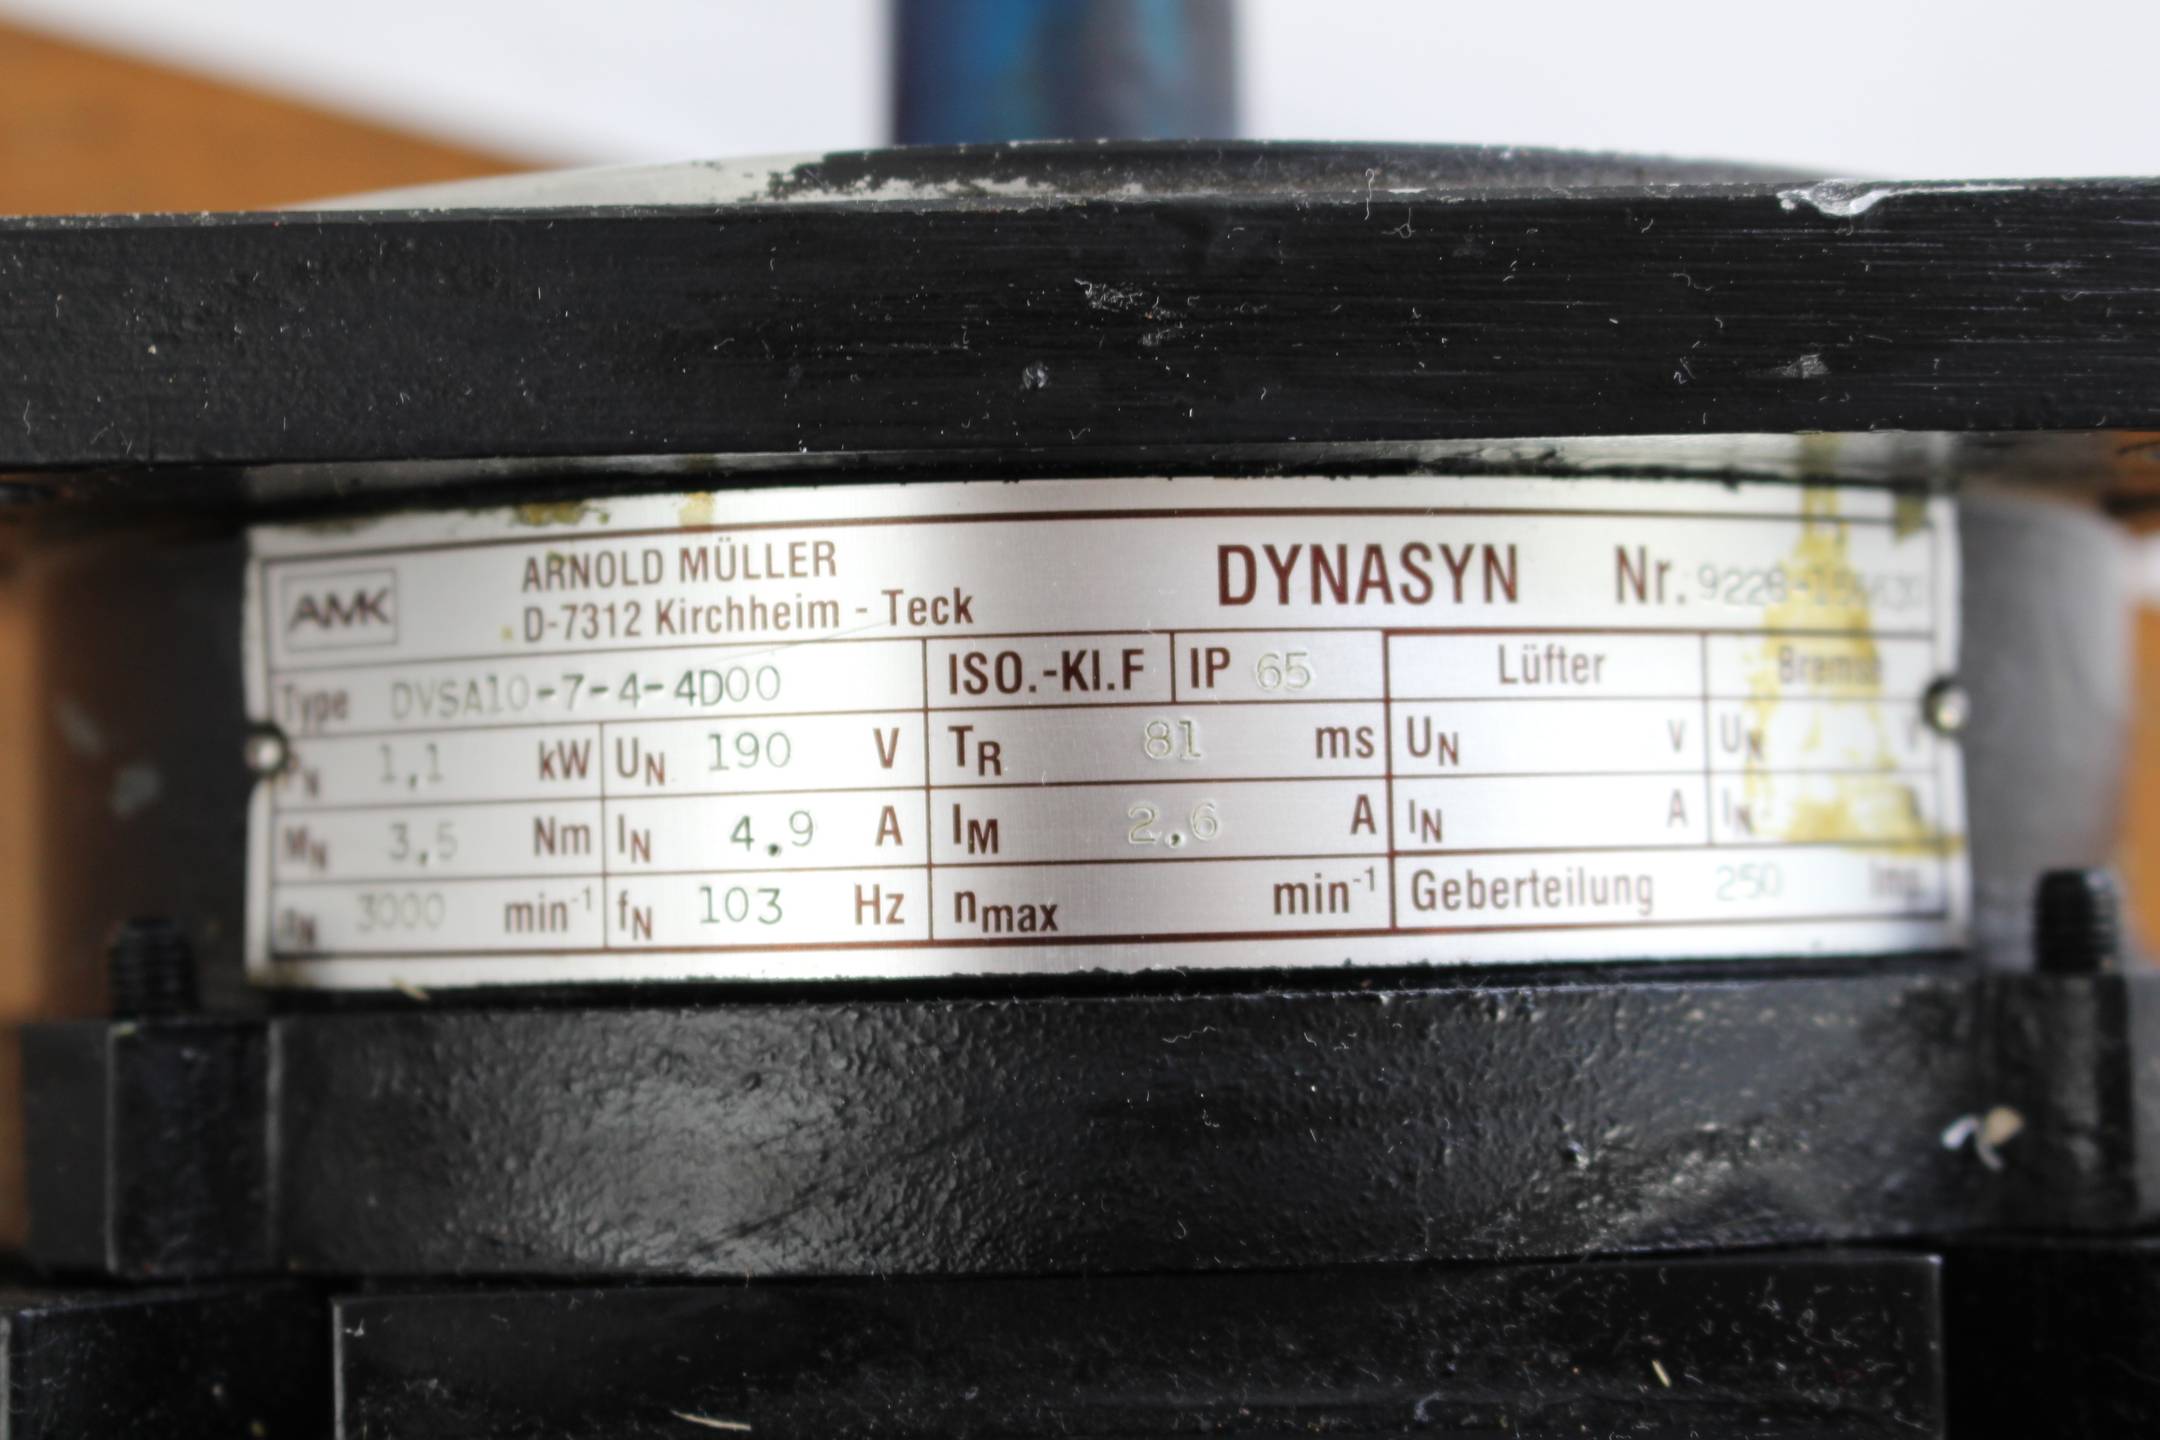 AMK Servomotor Dynasyn DVSA10-7-4-4D00